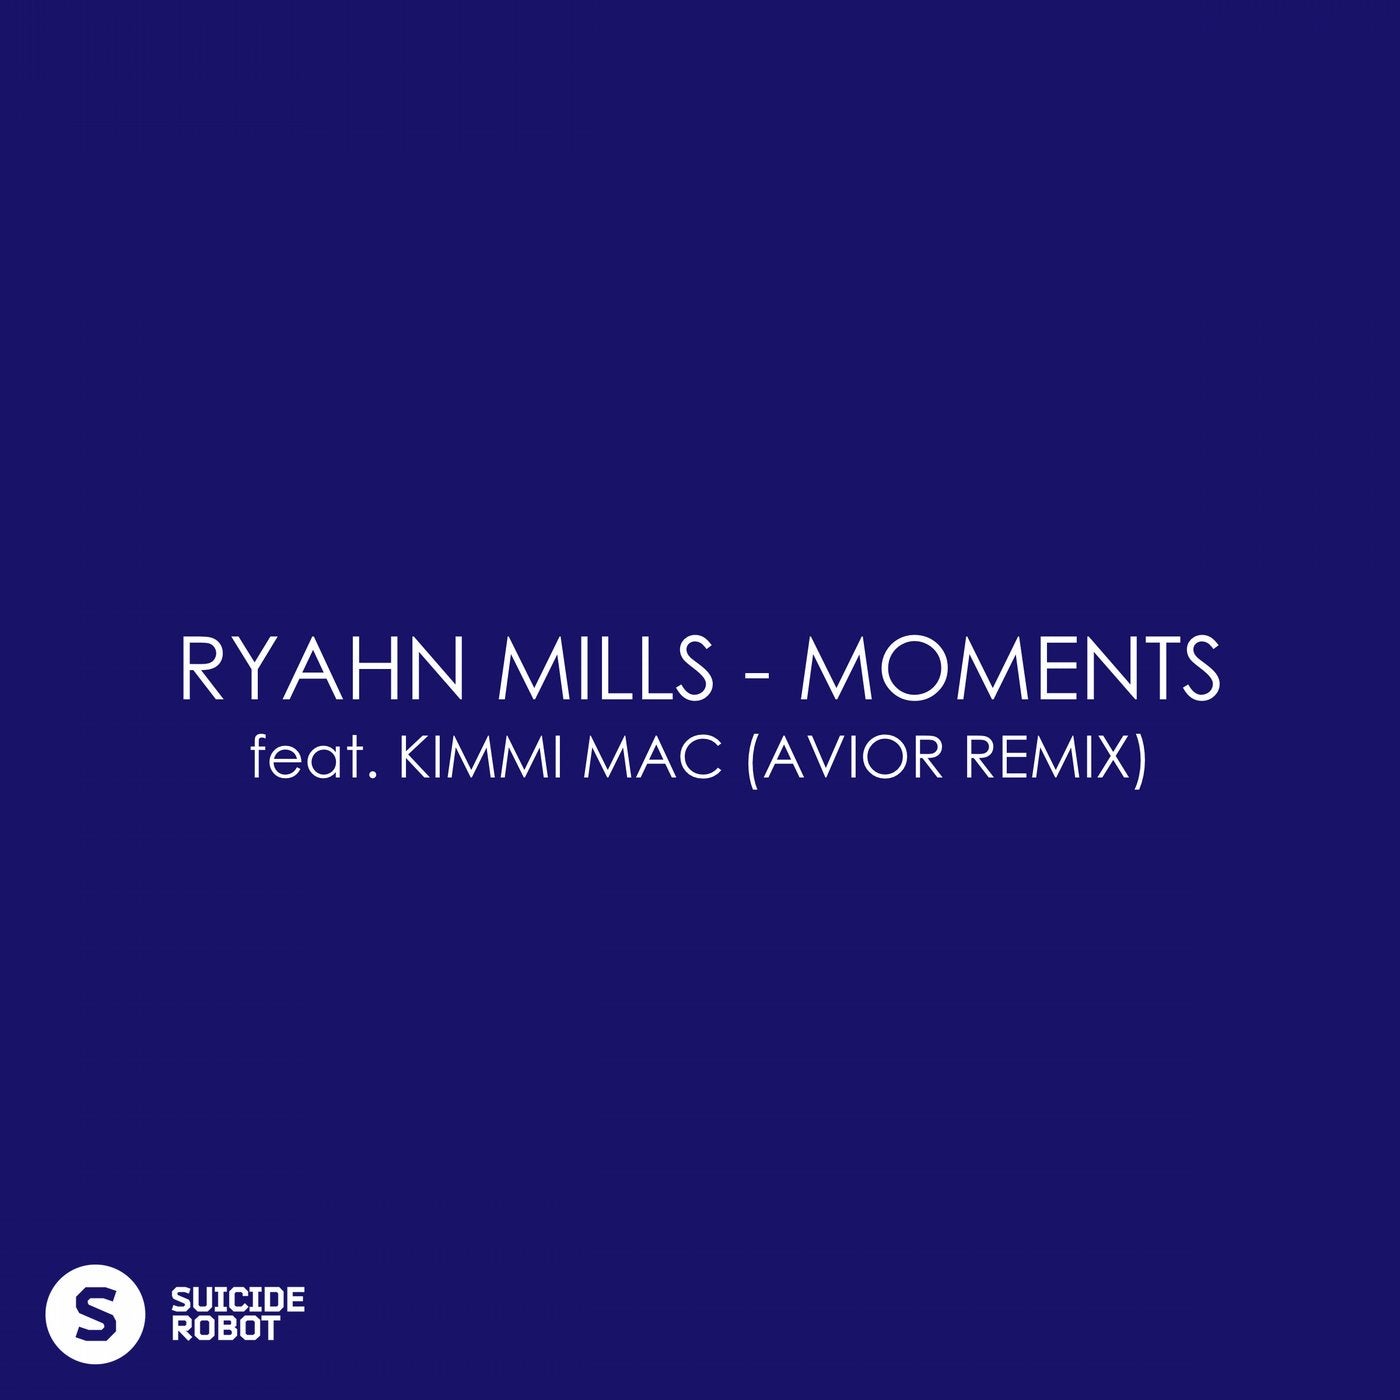 Moments feat Kimmi Mac (Avior Remix)